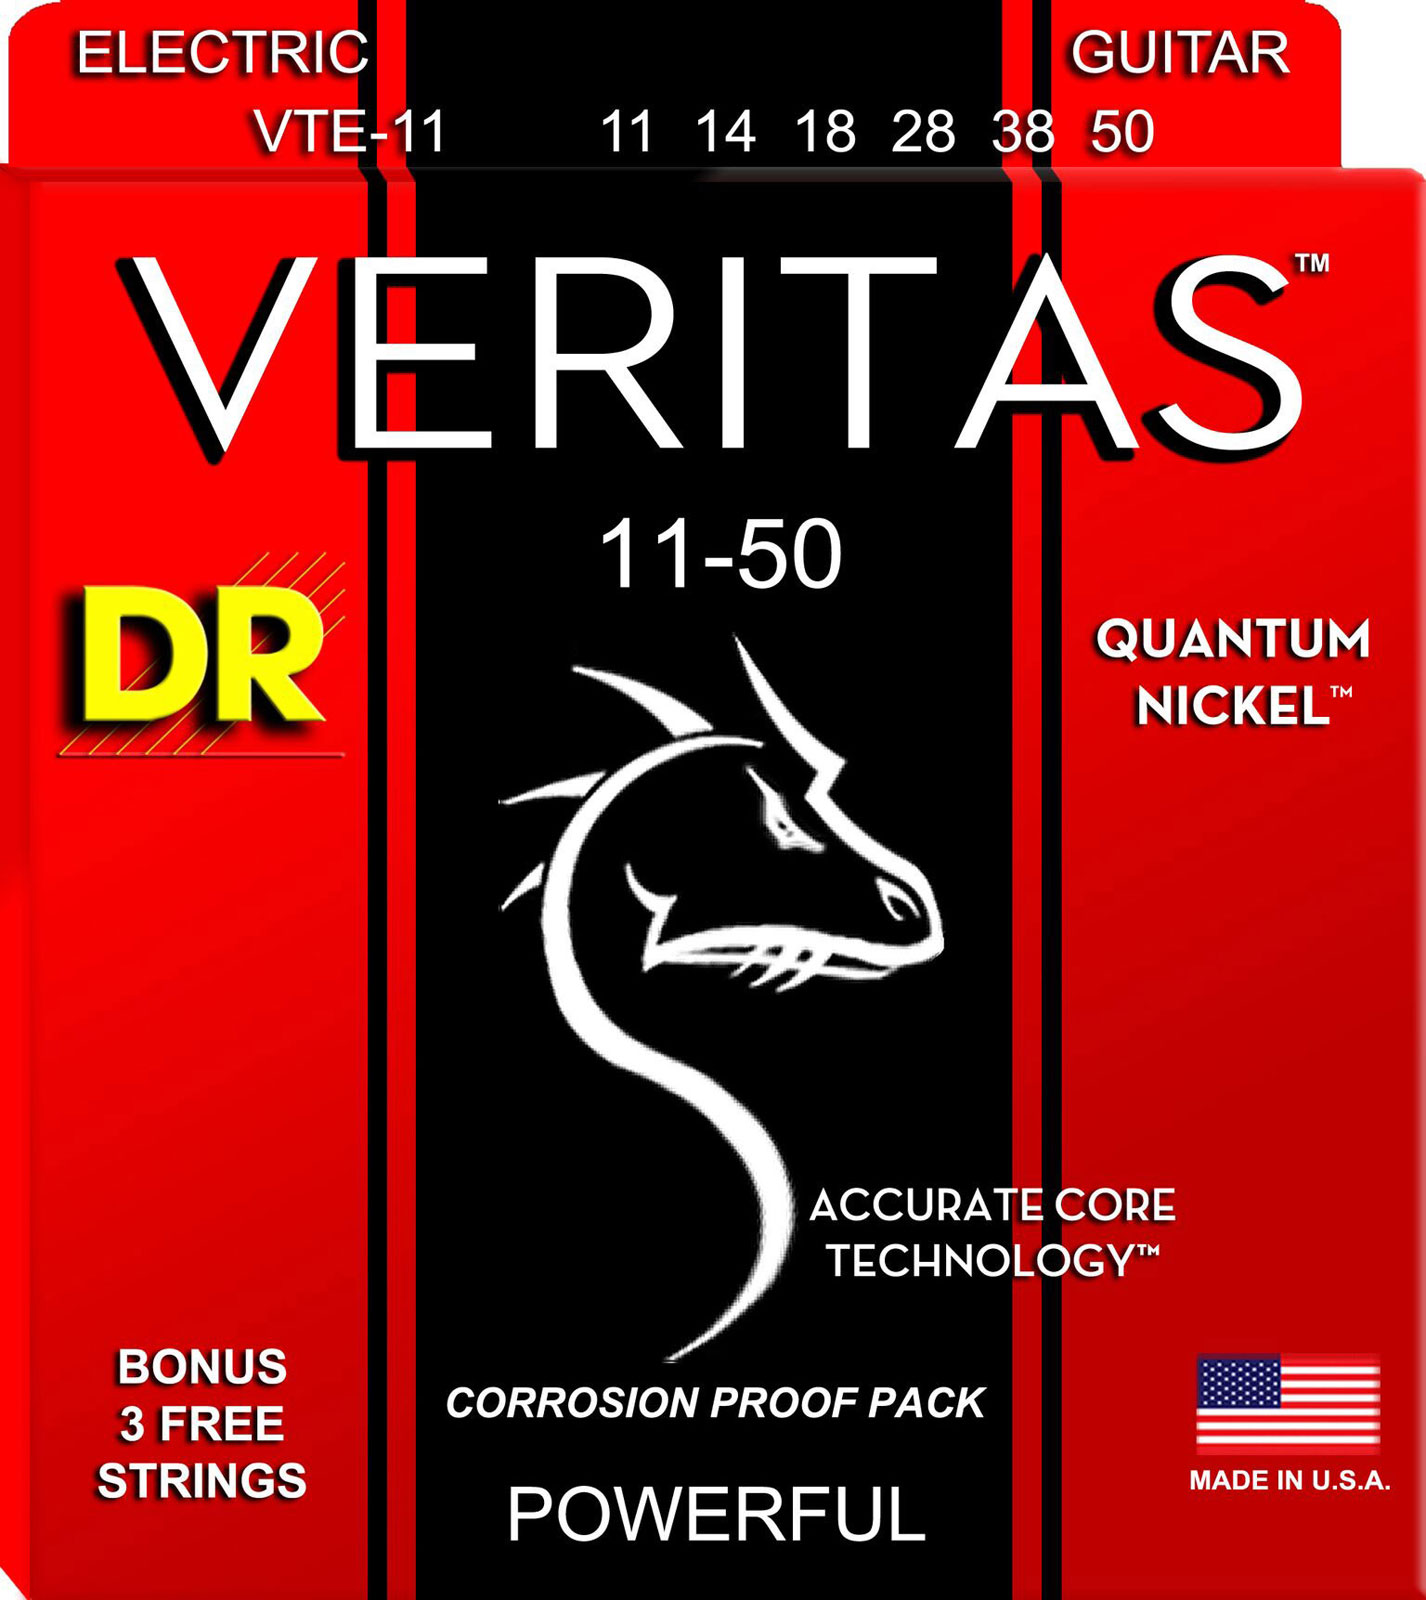 DR STRINGS 11-50 VTE-11 VERITAS